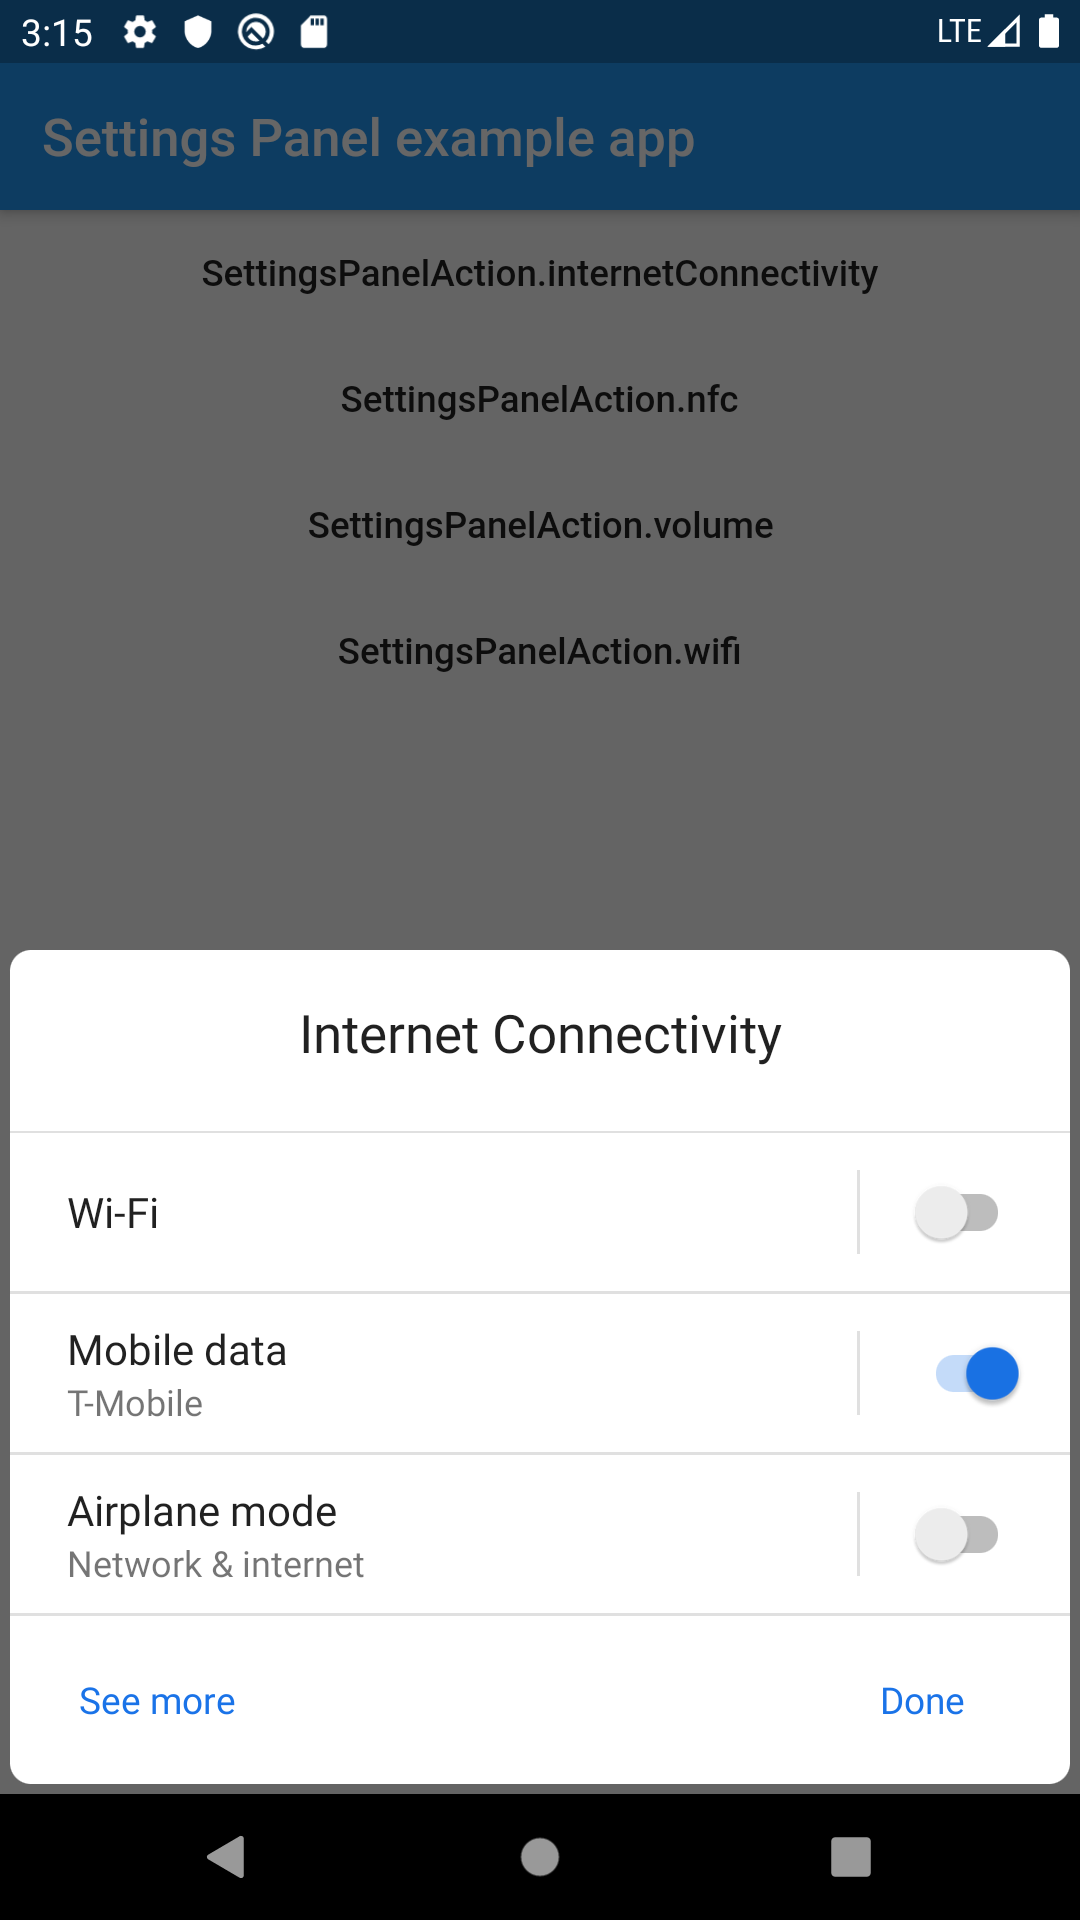 dartsidedev/settings_panel_android example app screenshot displaying internet connectivity settings panel